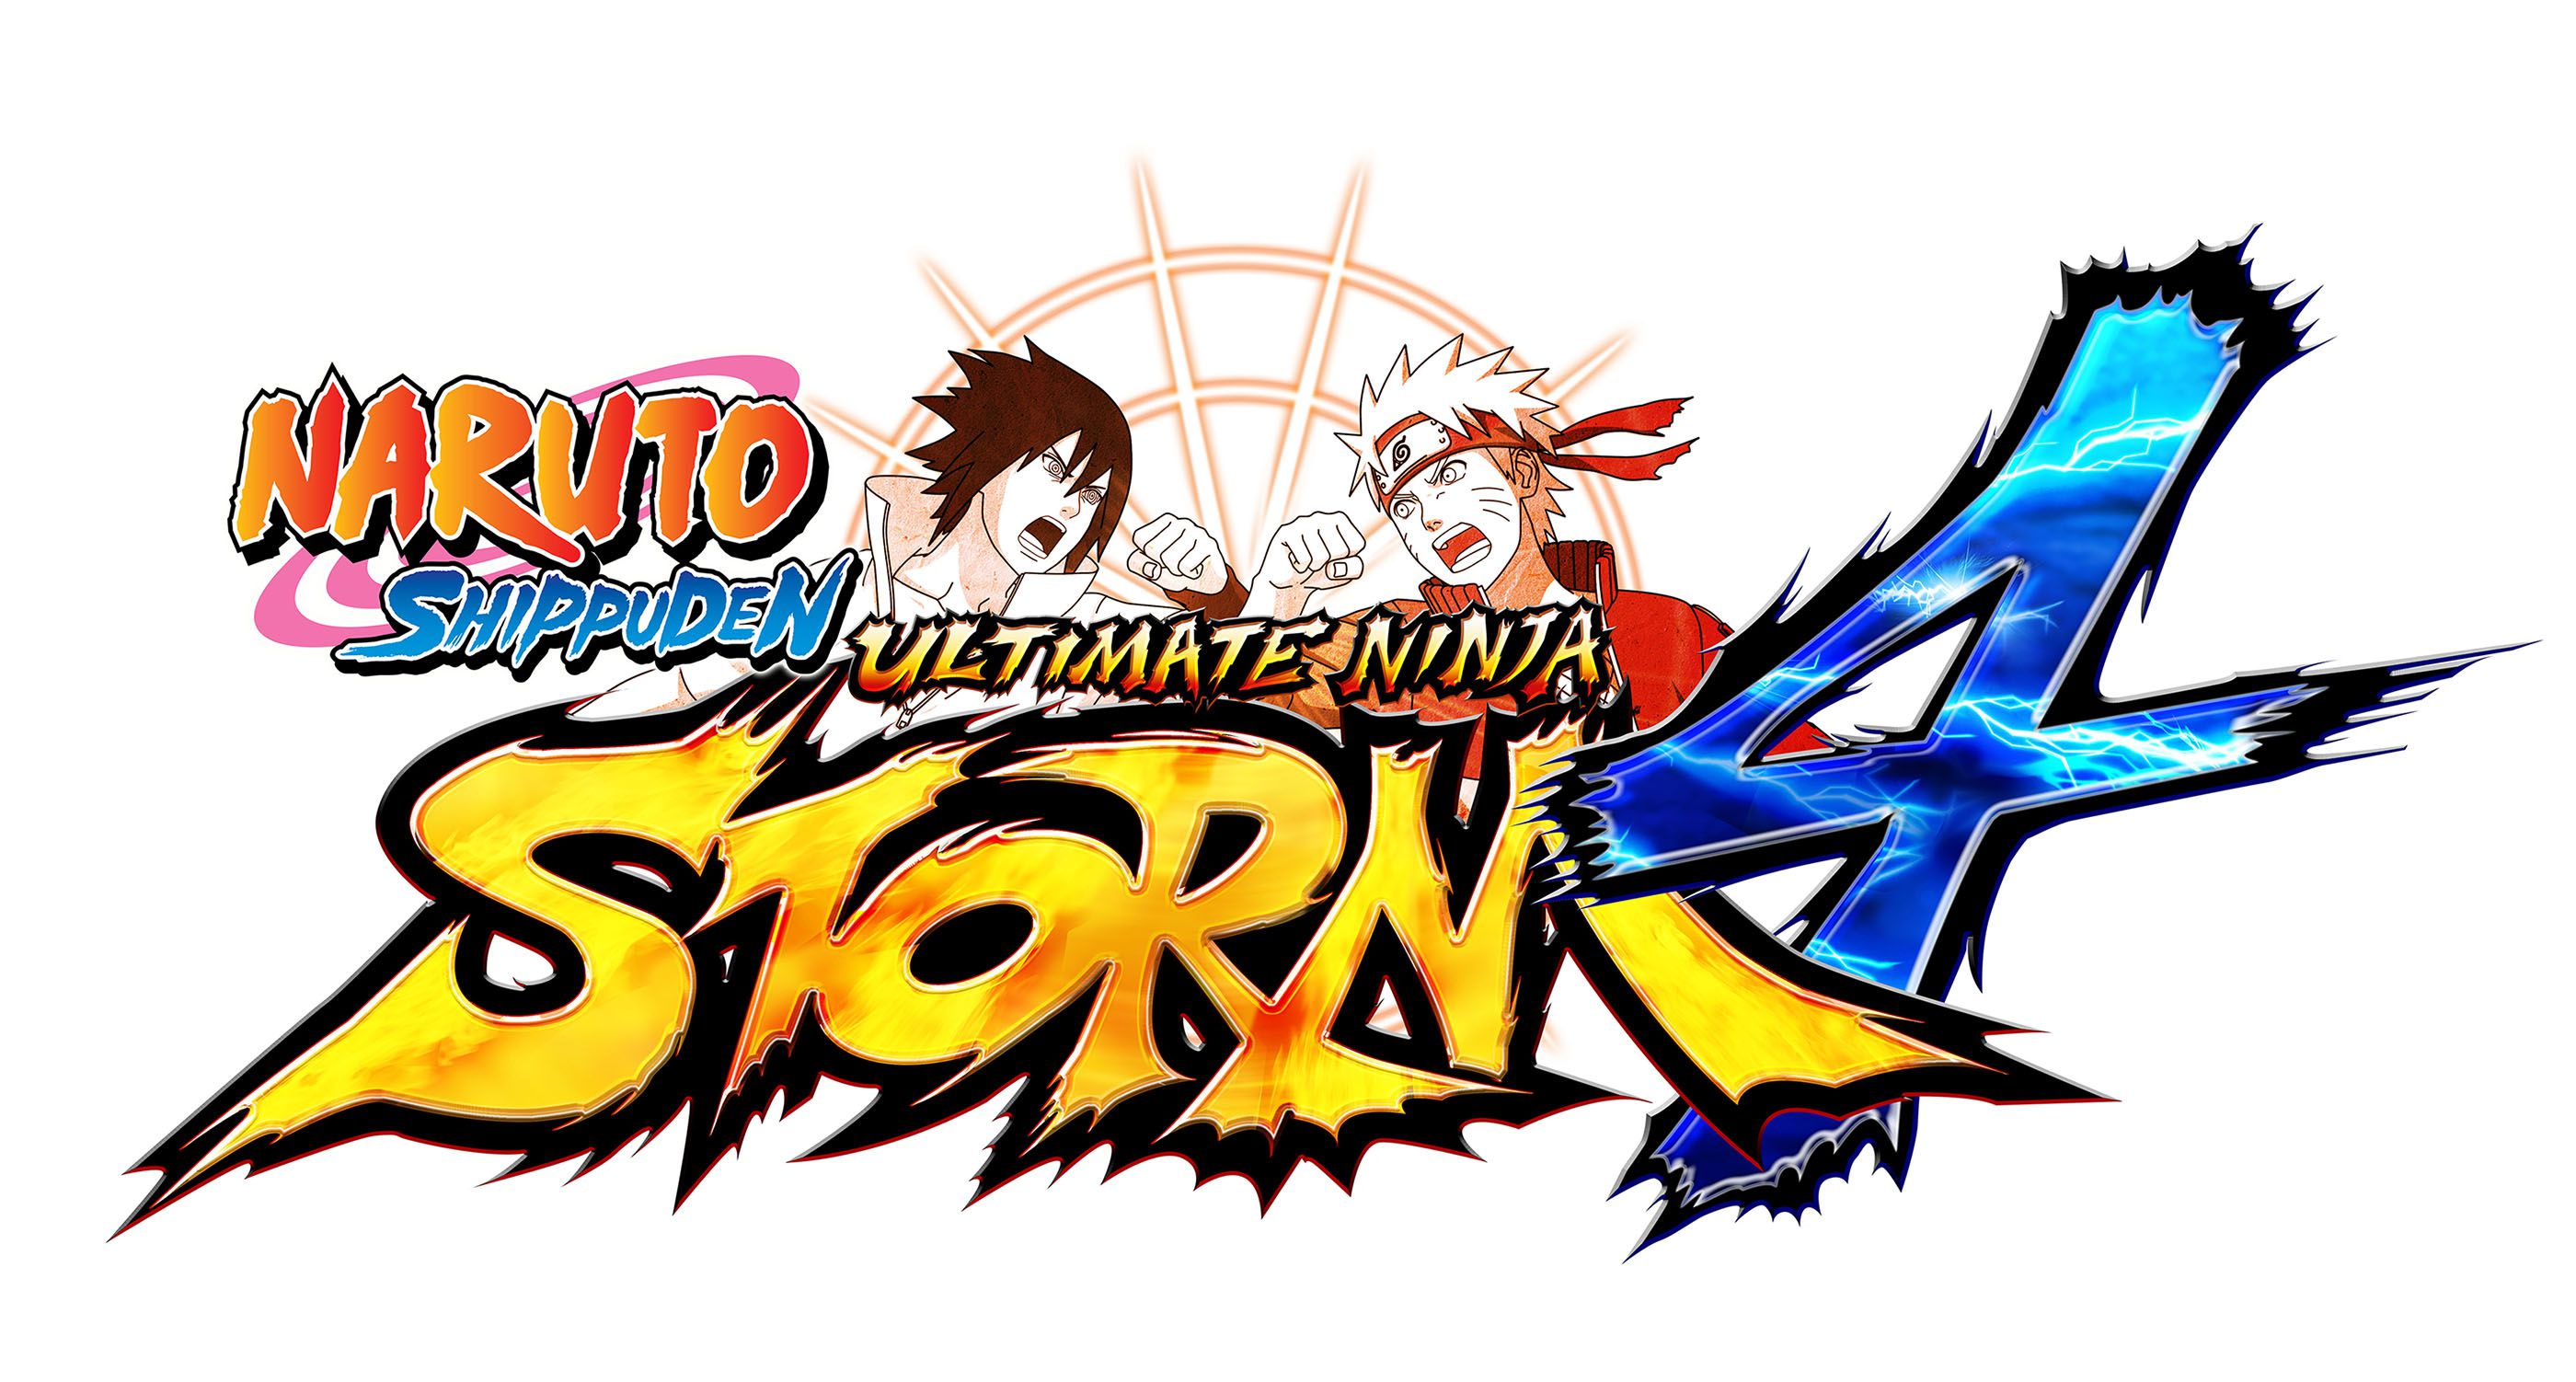 Naruto Shippuden Ultimate Ninja Storm 4 - logo